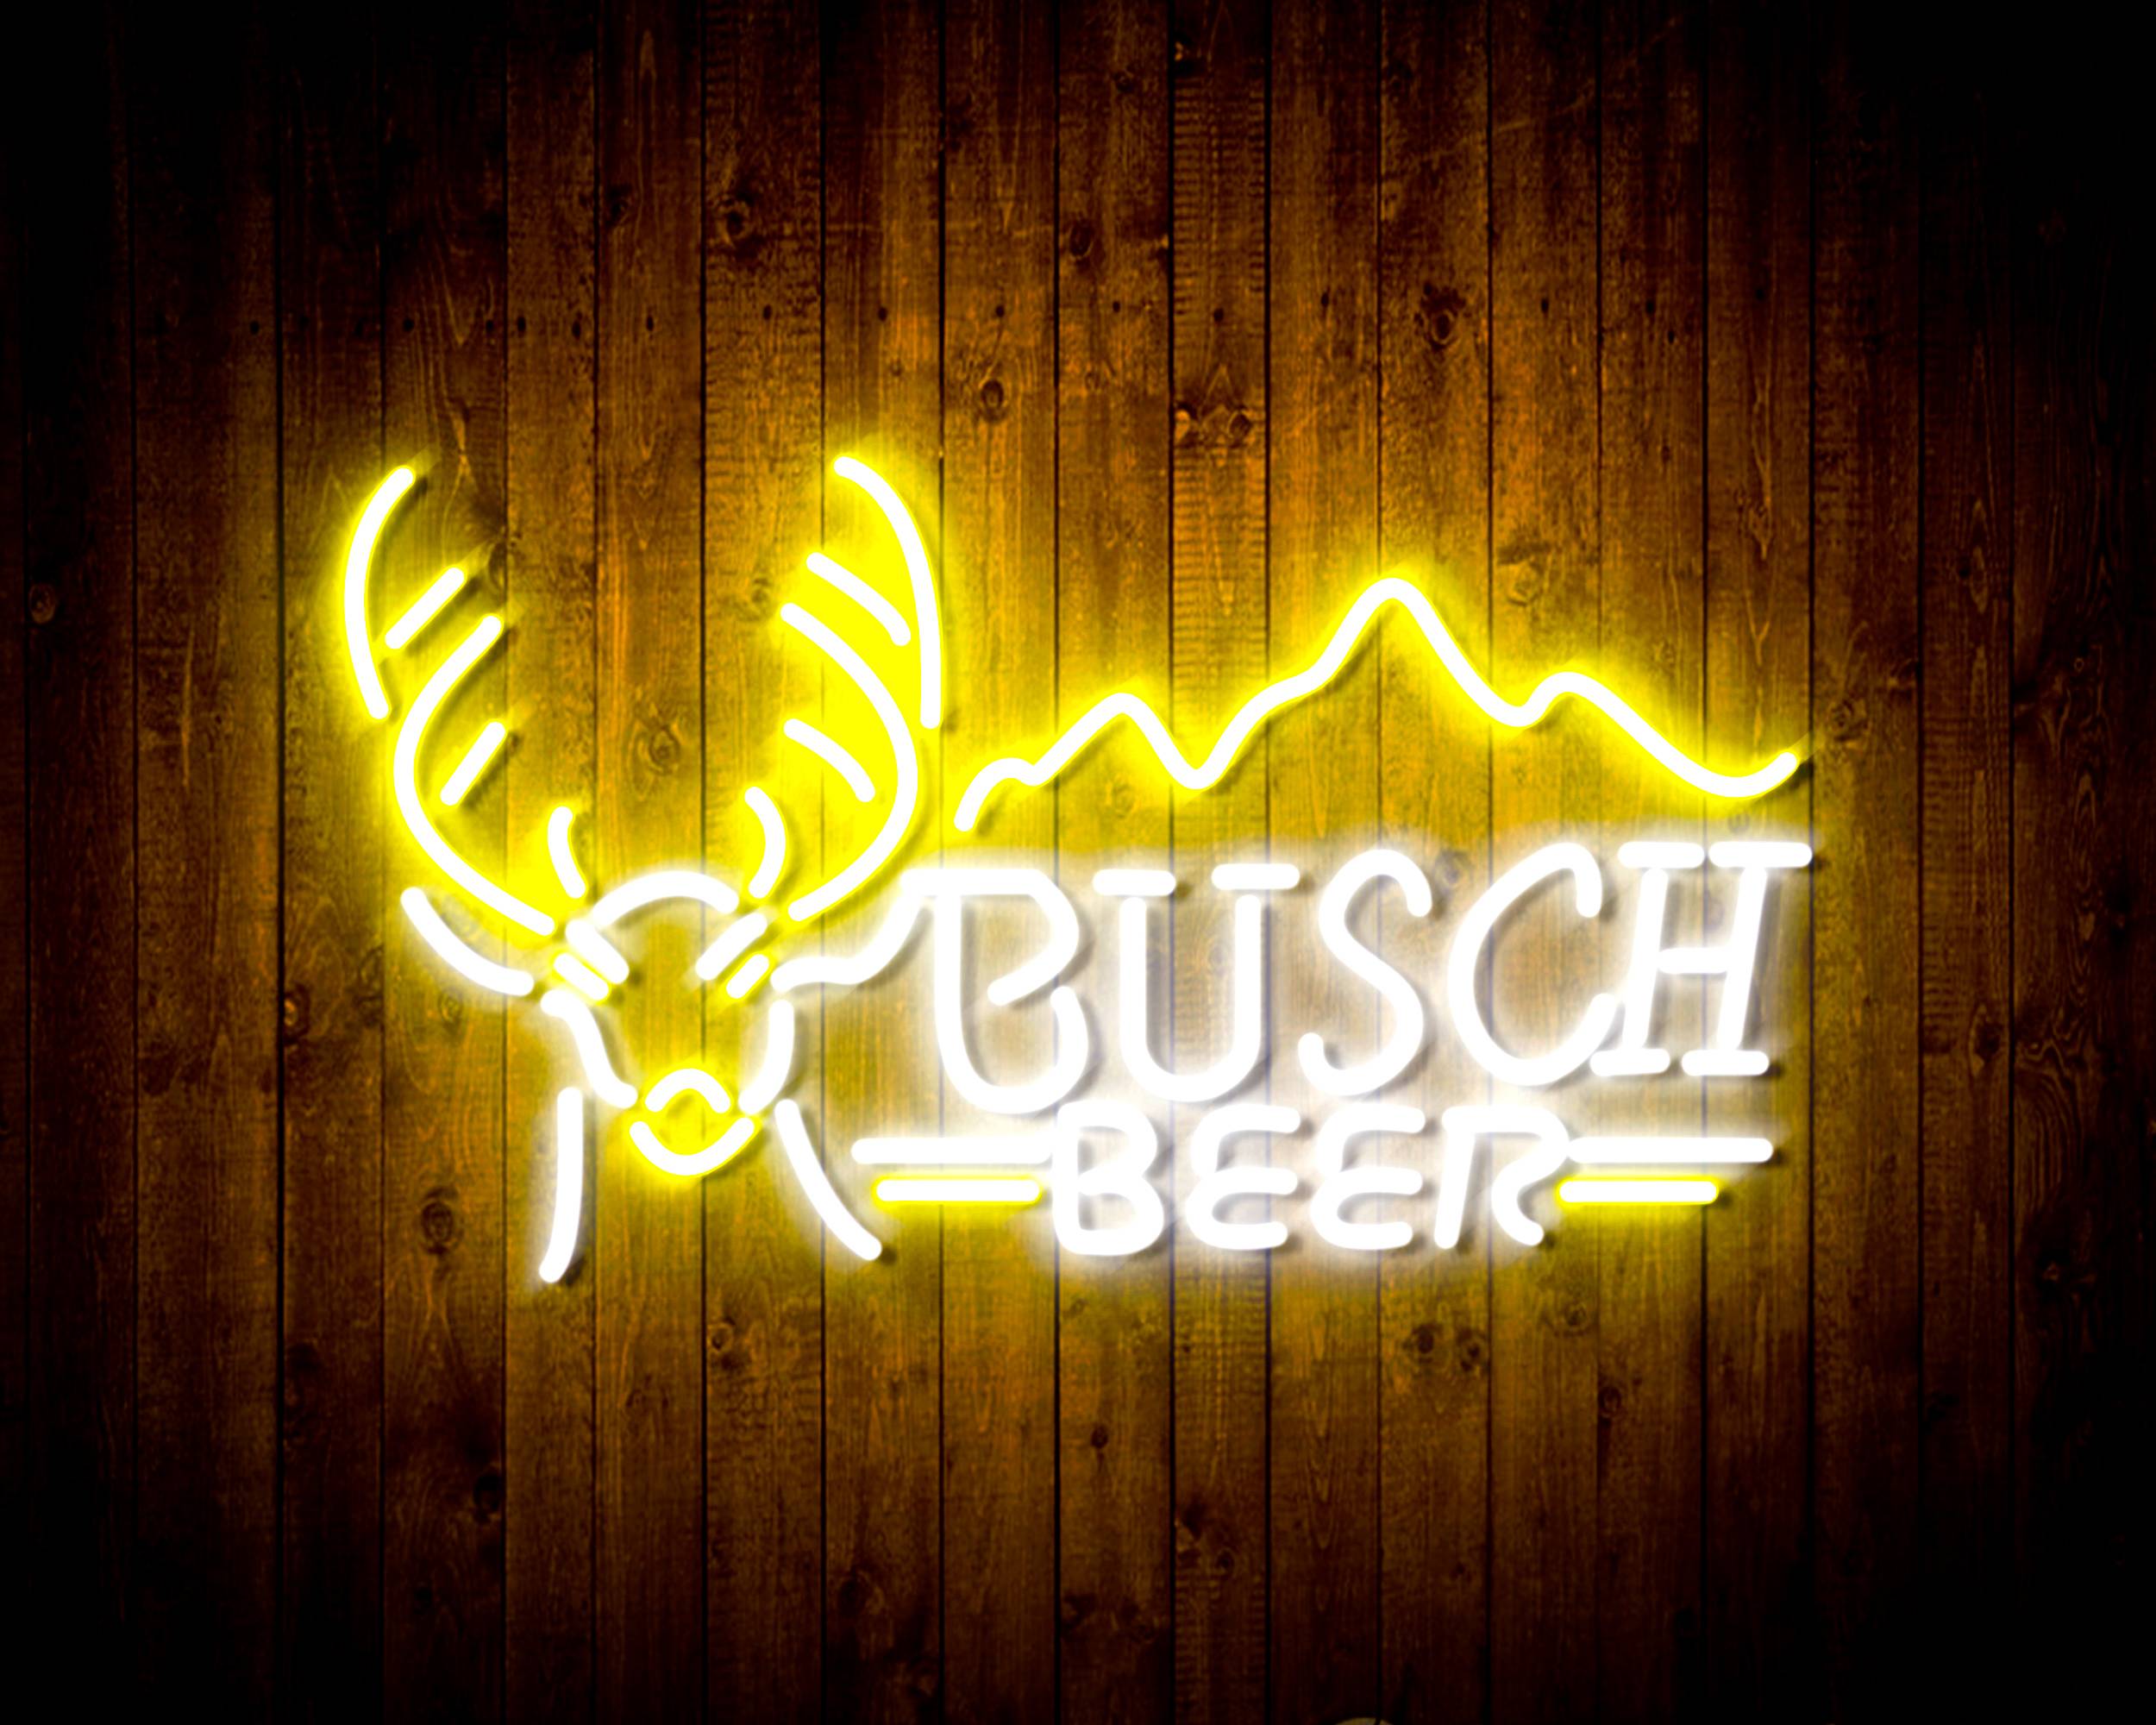 Busch Beer with Deer Head Handmade LED Neon Light Sign